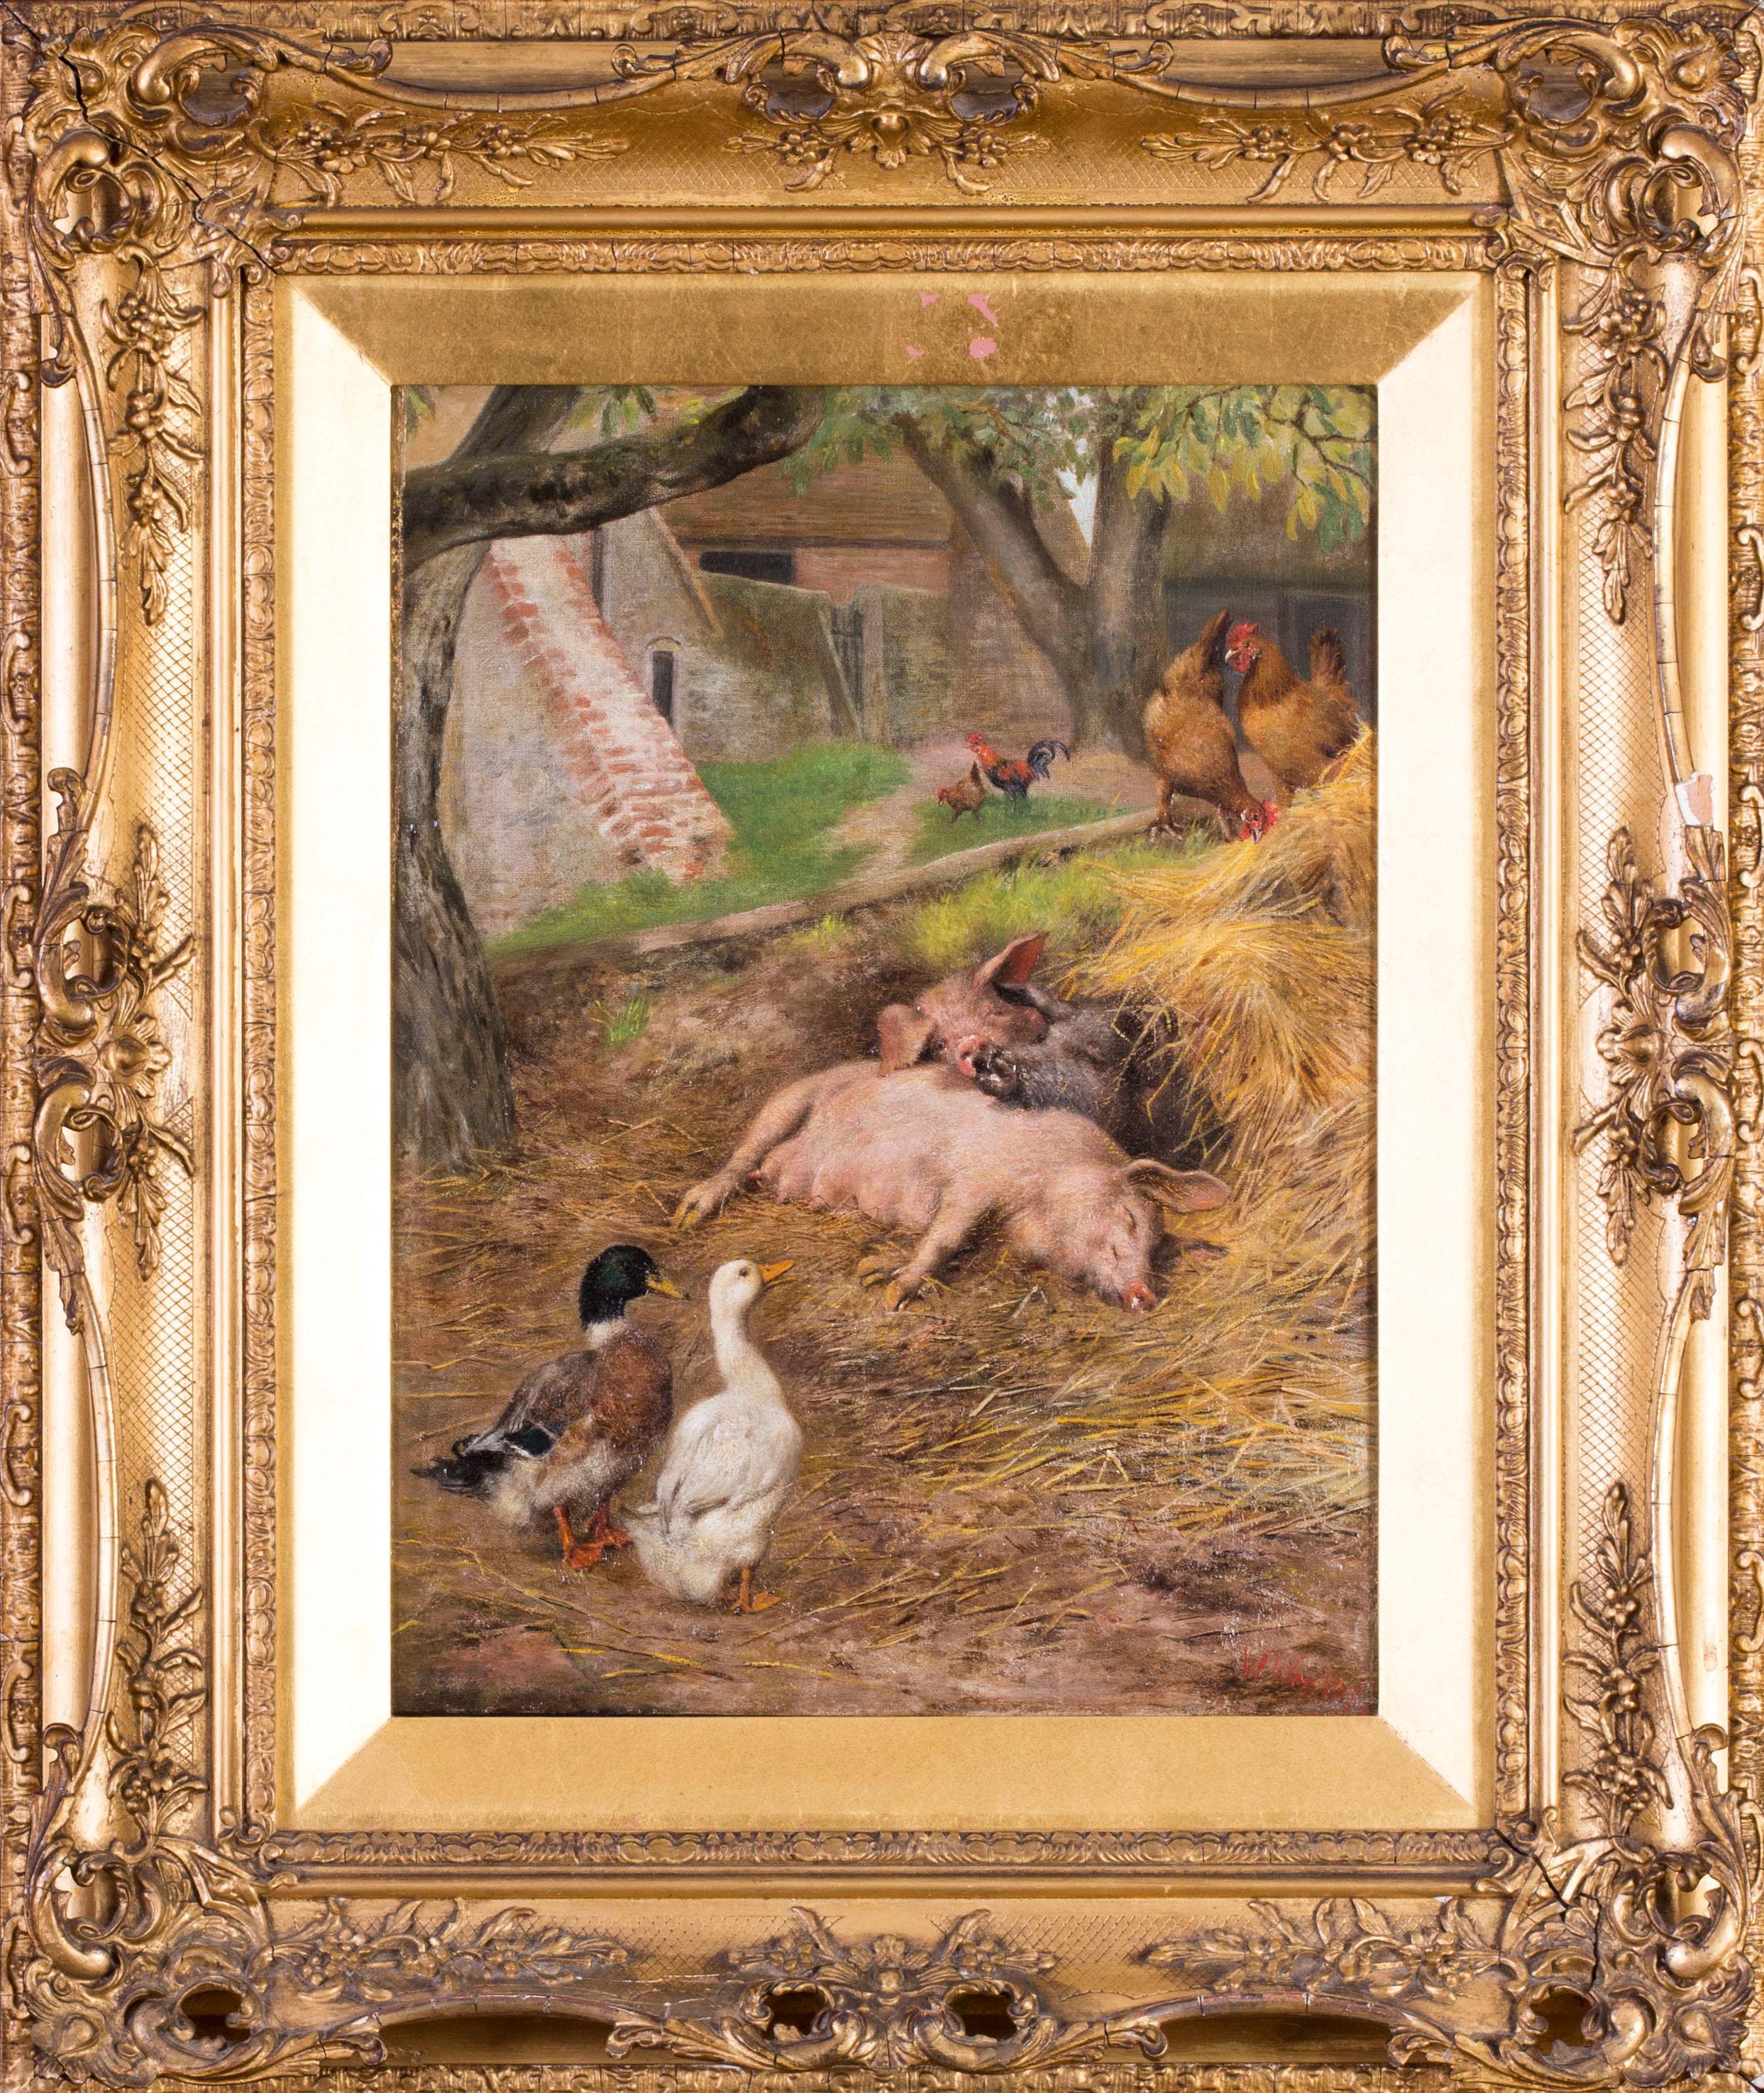 Herbert William Weekes Animal Painting - Pigs slumbering amongst ducks and chickens